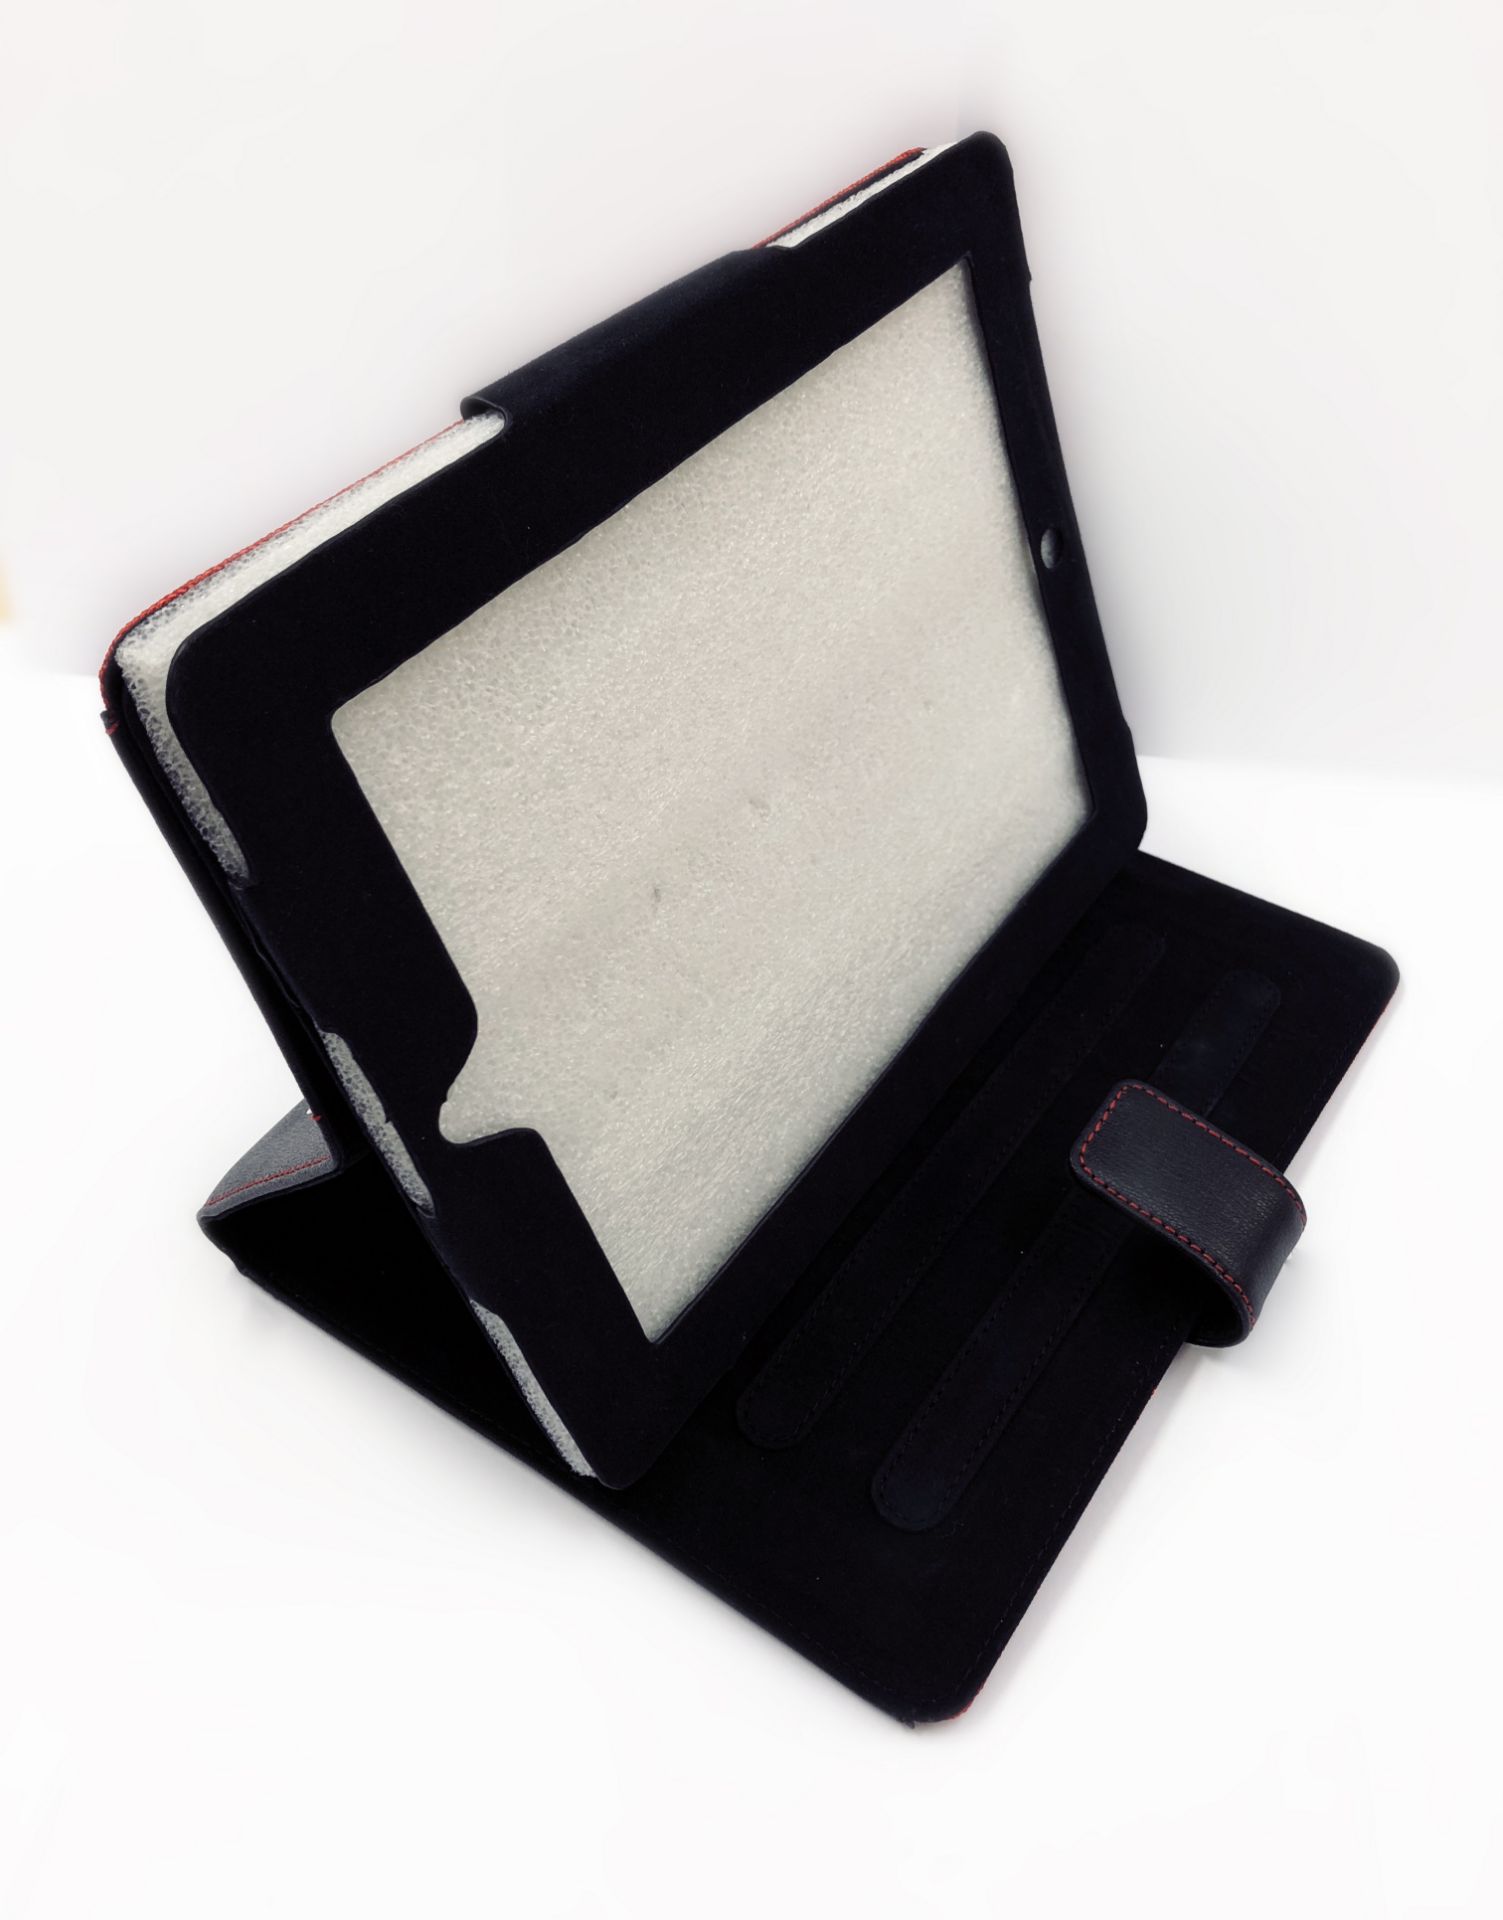 V Brand New Samsonite Black Leather & Red Canvas Ipad Mini Case - Image 3 of 6